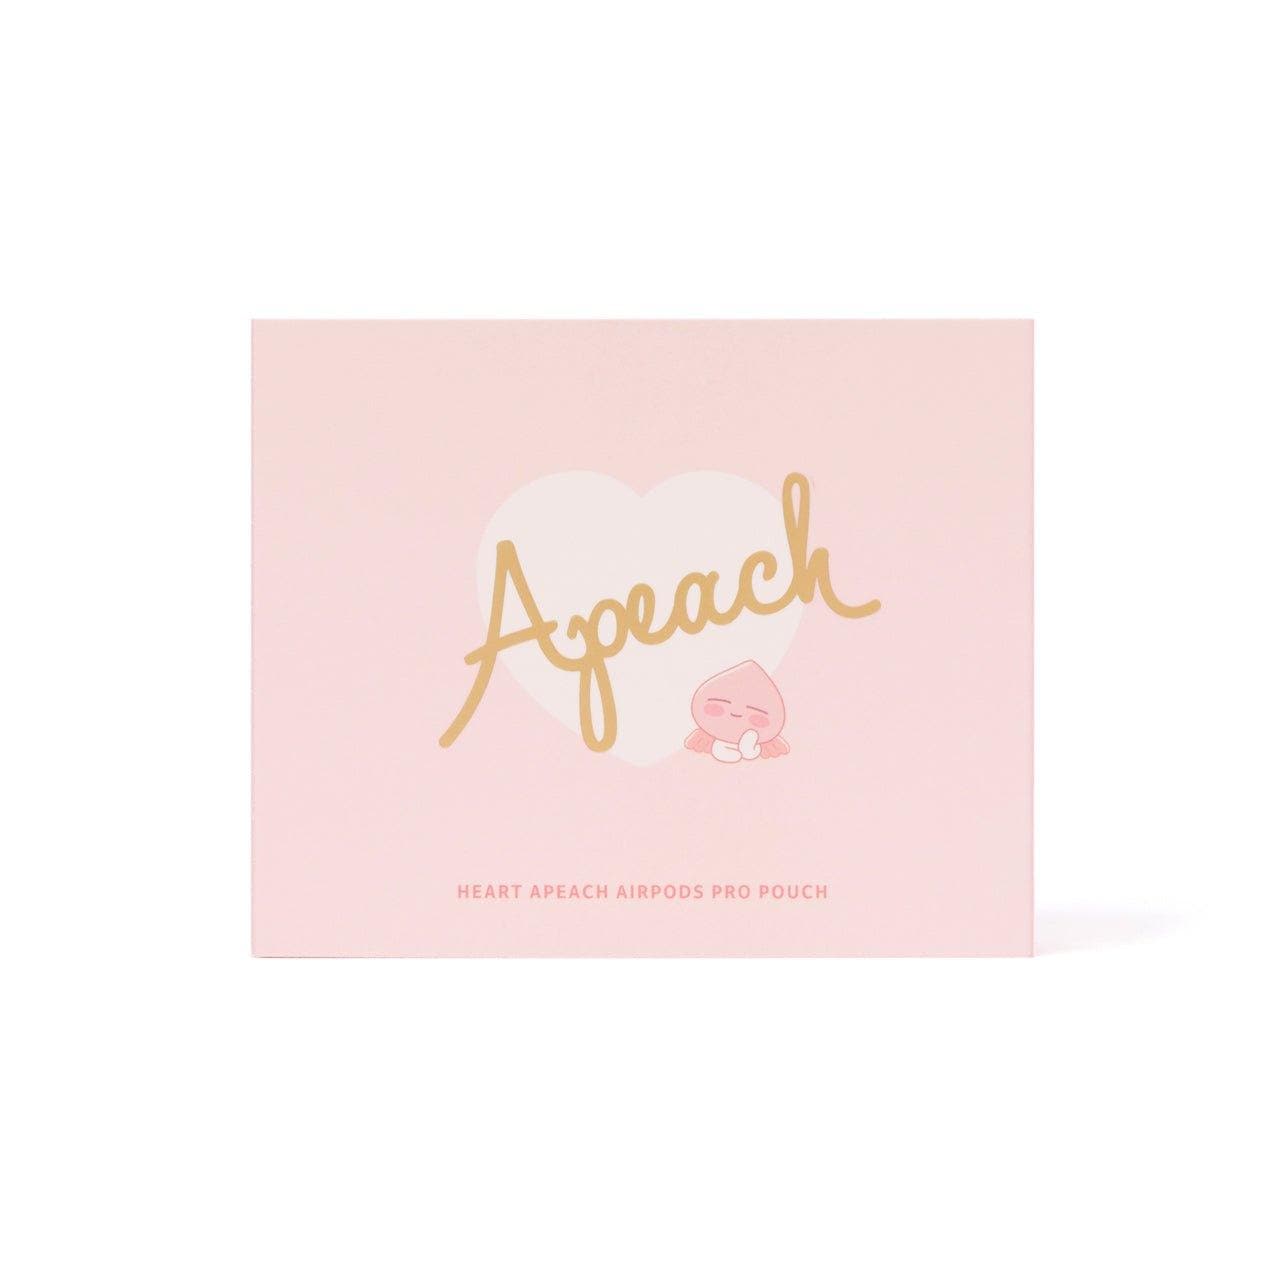 Heart Apeach Airpods Pro Pouch - Daebak